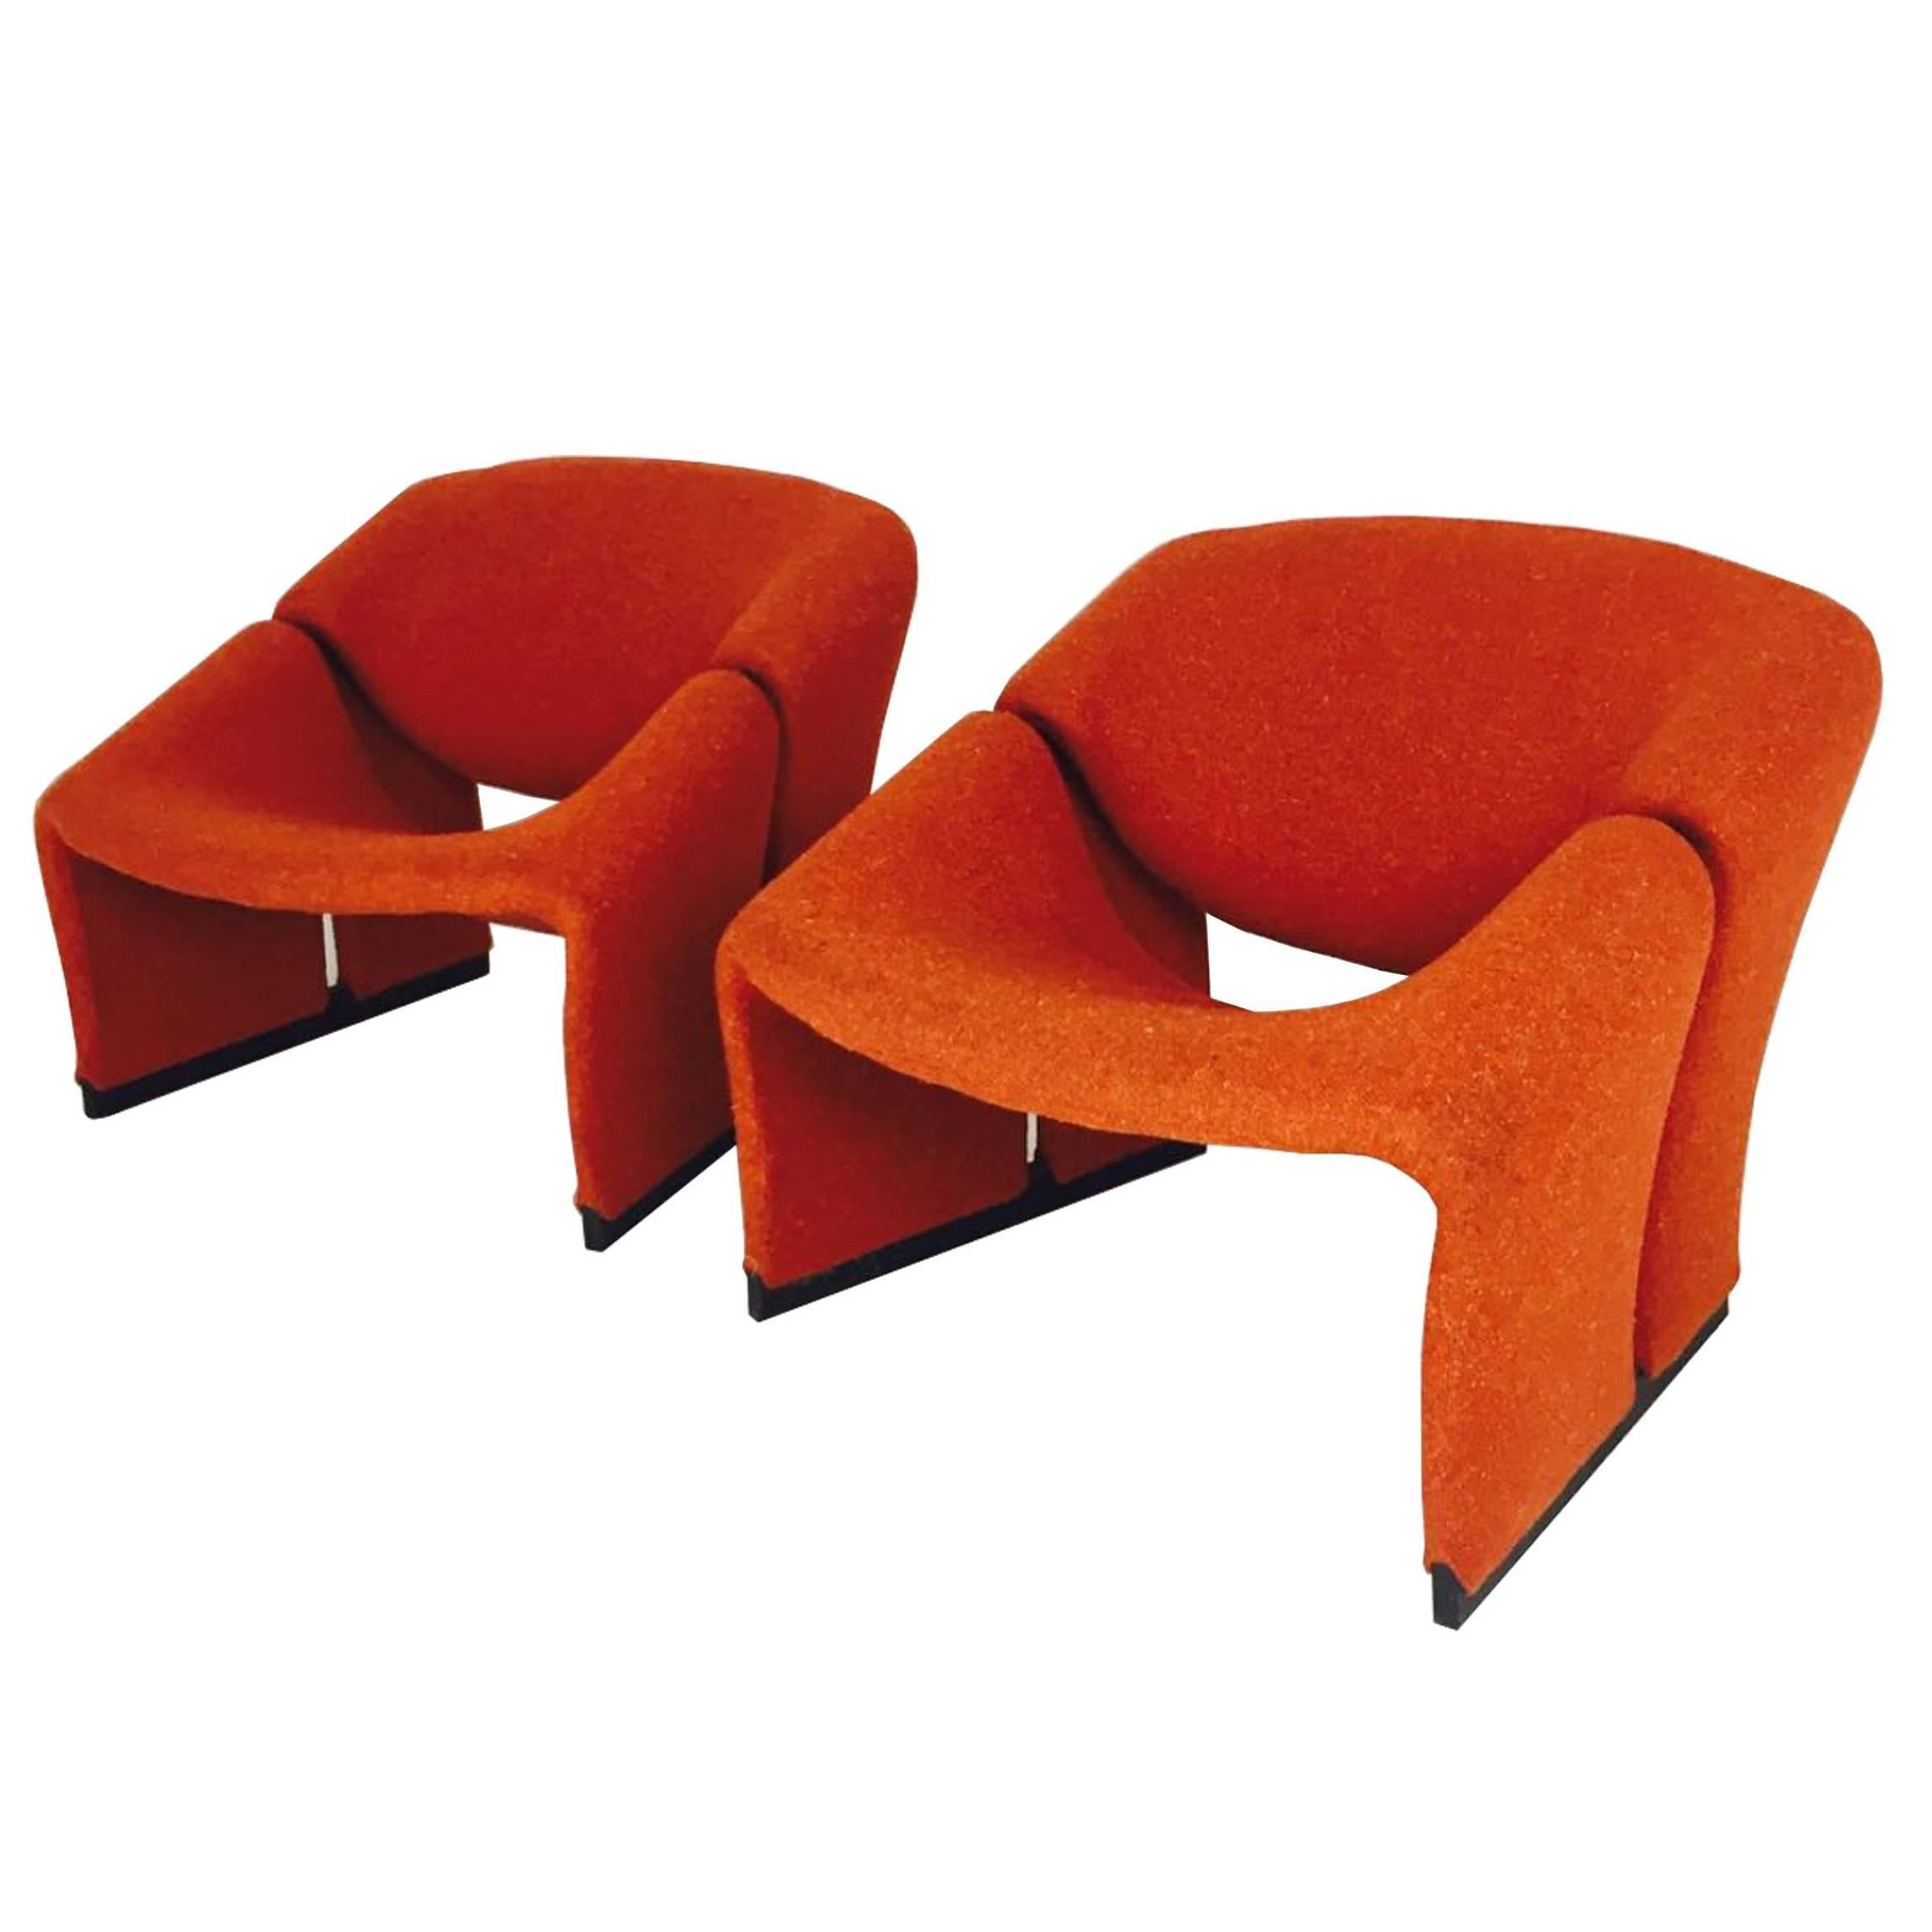 Pair of Orange Groovy Pierre Paulin Lounge Chairs for Artifort